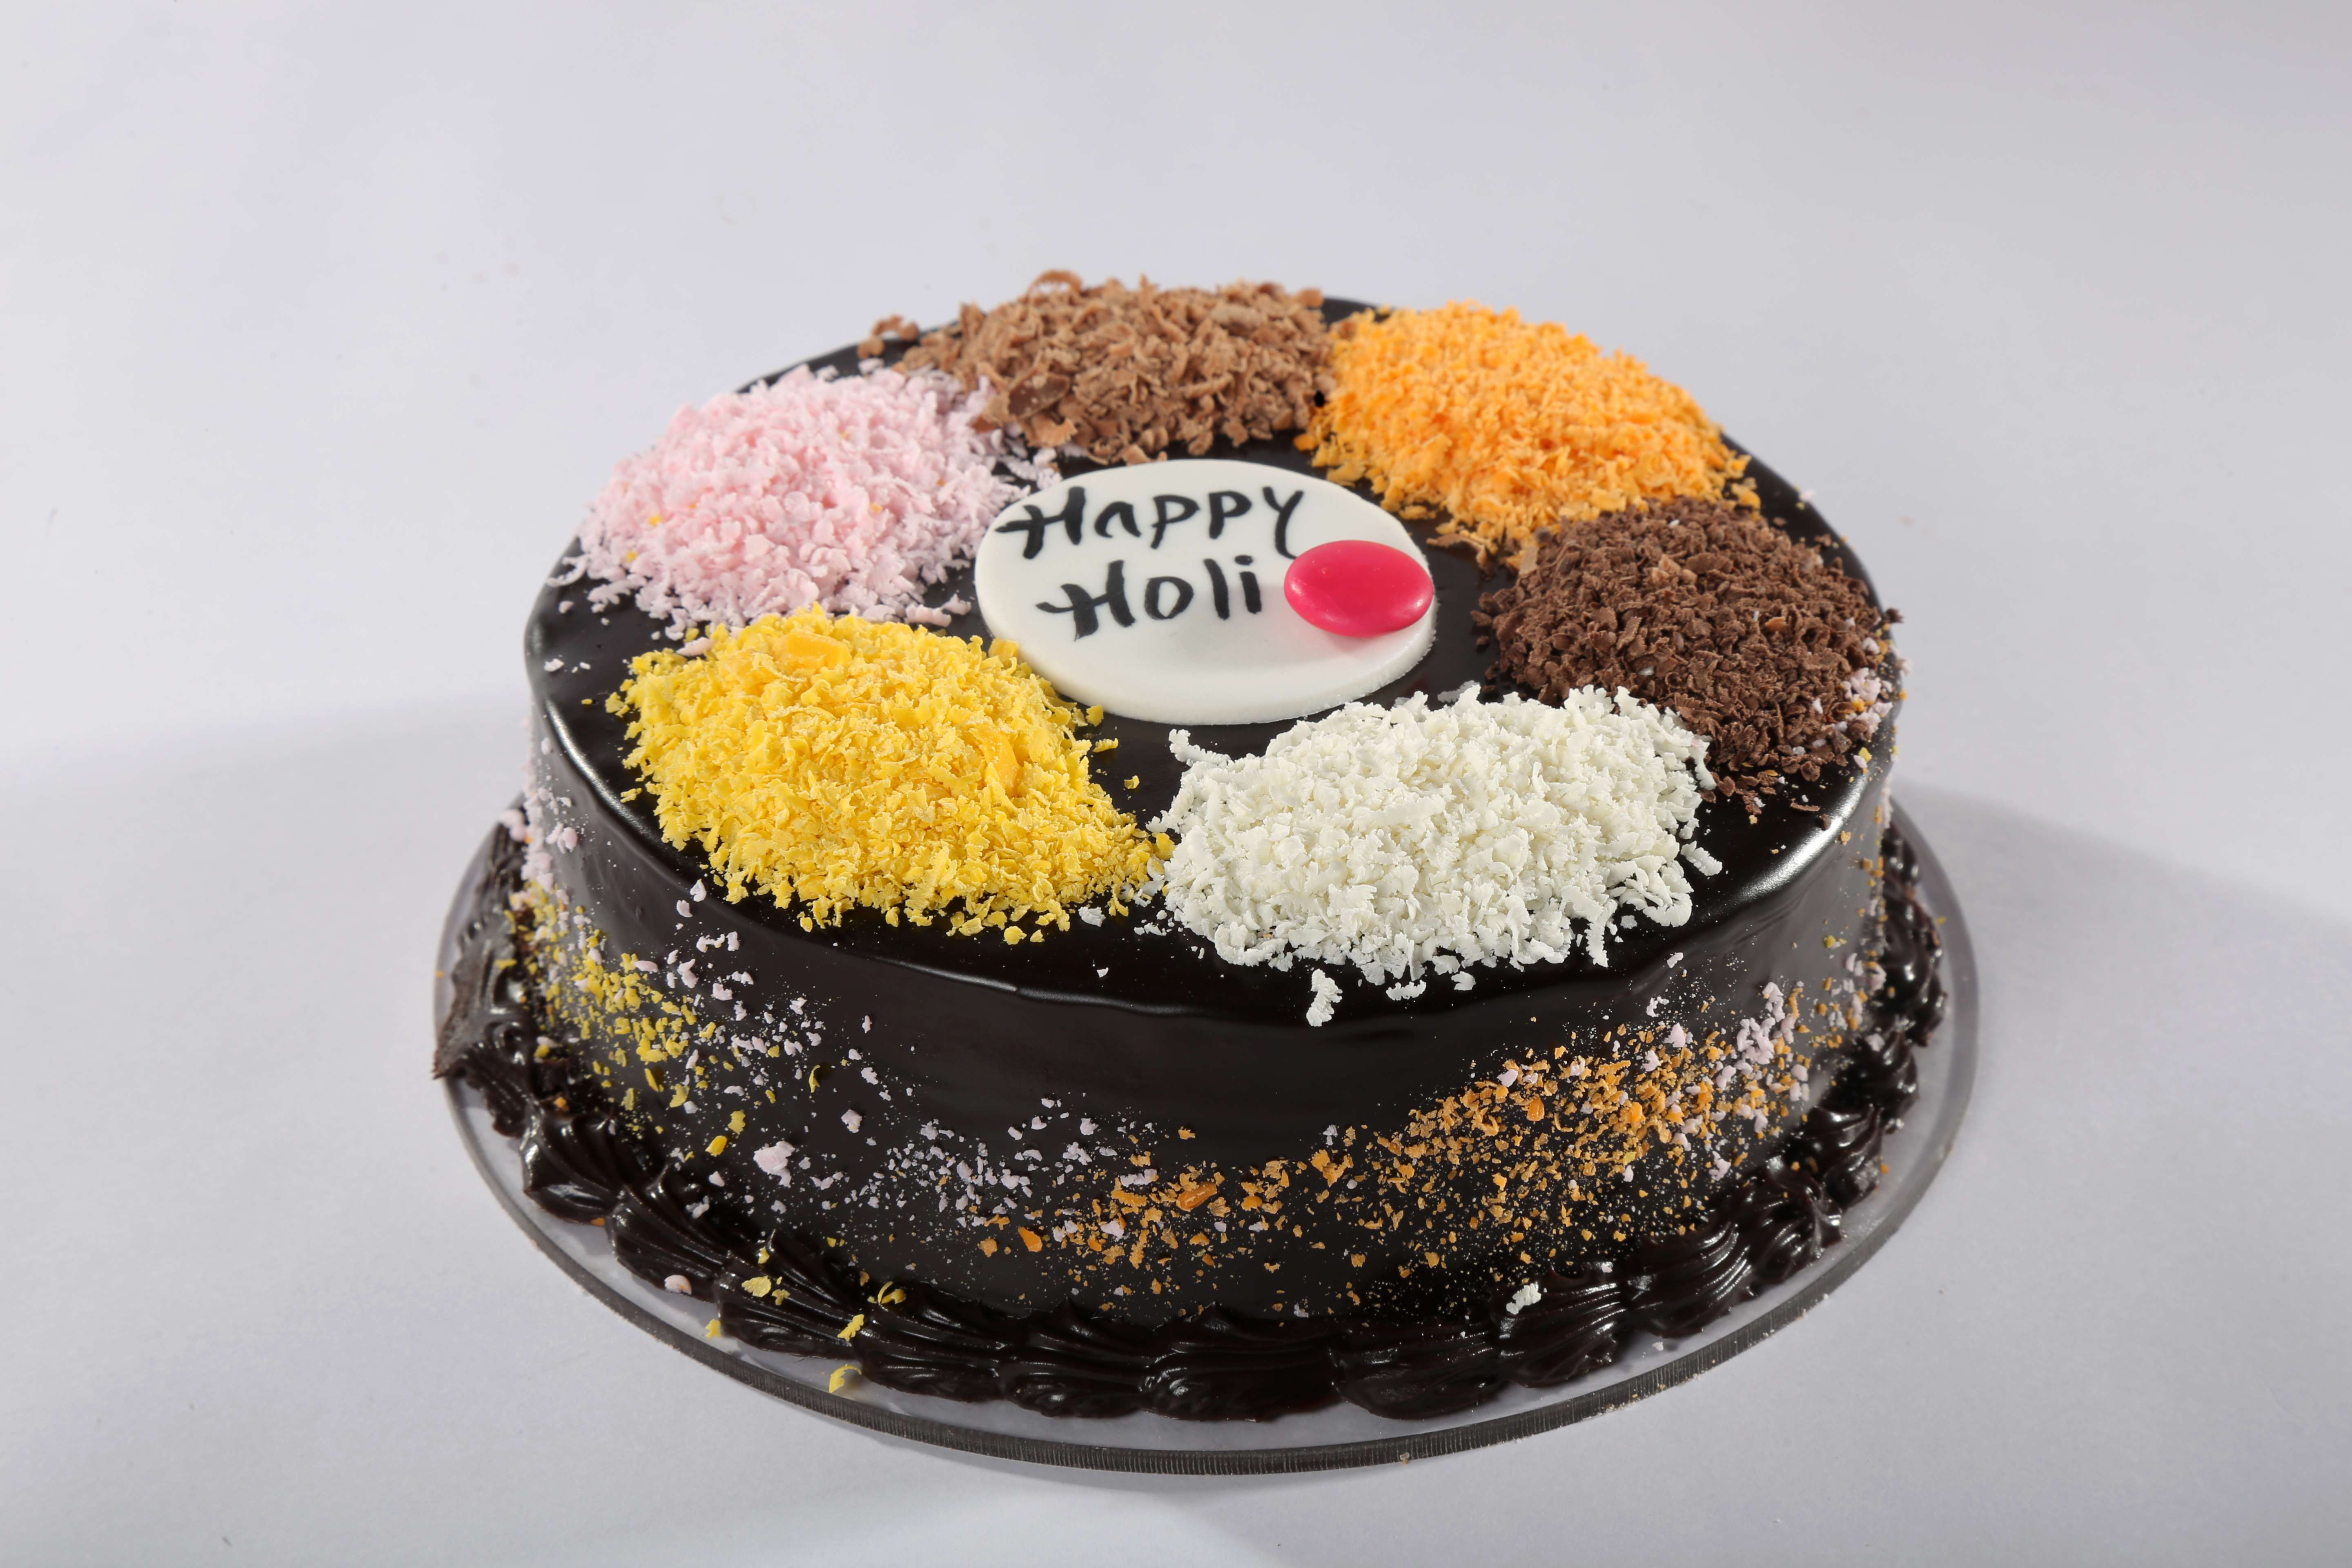 Lifesavers Gummies themed cake 😂 : r/cakedecorating